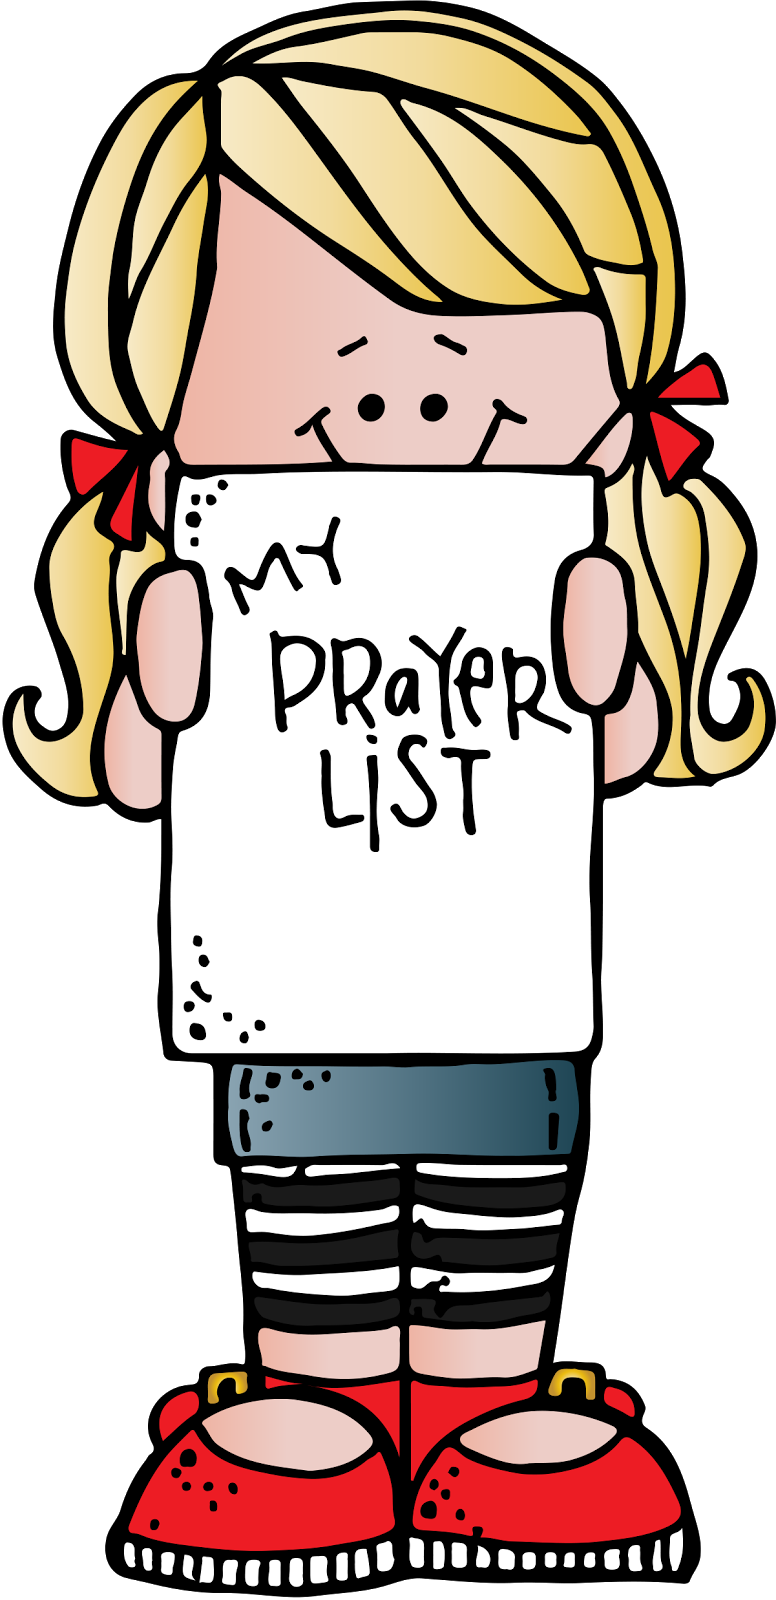 Prayer list clipart 5 » Clipart Station.